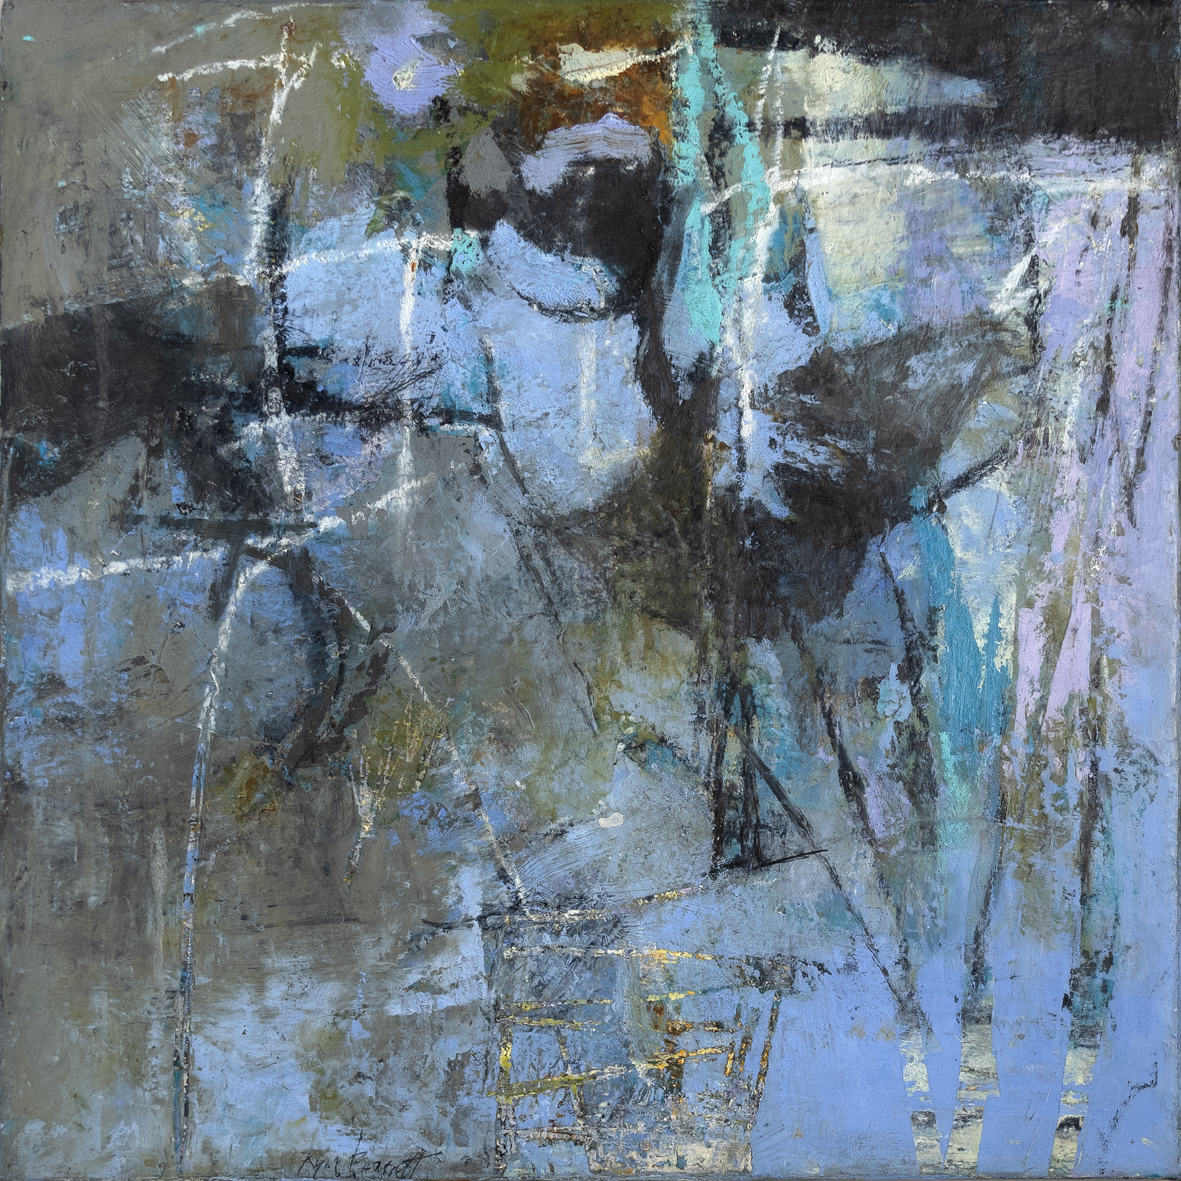 Genius Loci - creek 2022 | Kym Barrett | Oils and cold wax medium on canvas | 48 x 48 cm, framed in dark-stained oak | $1100